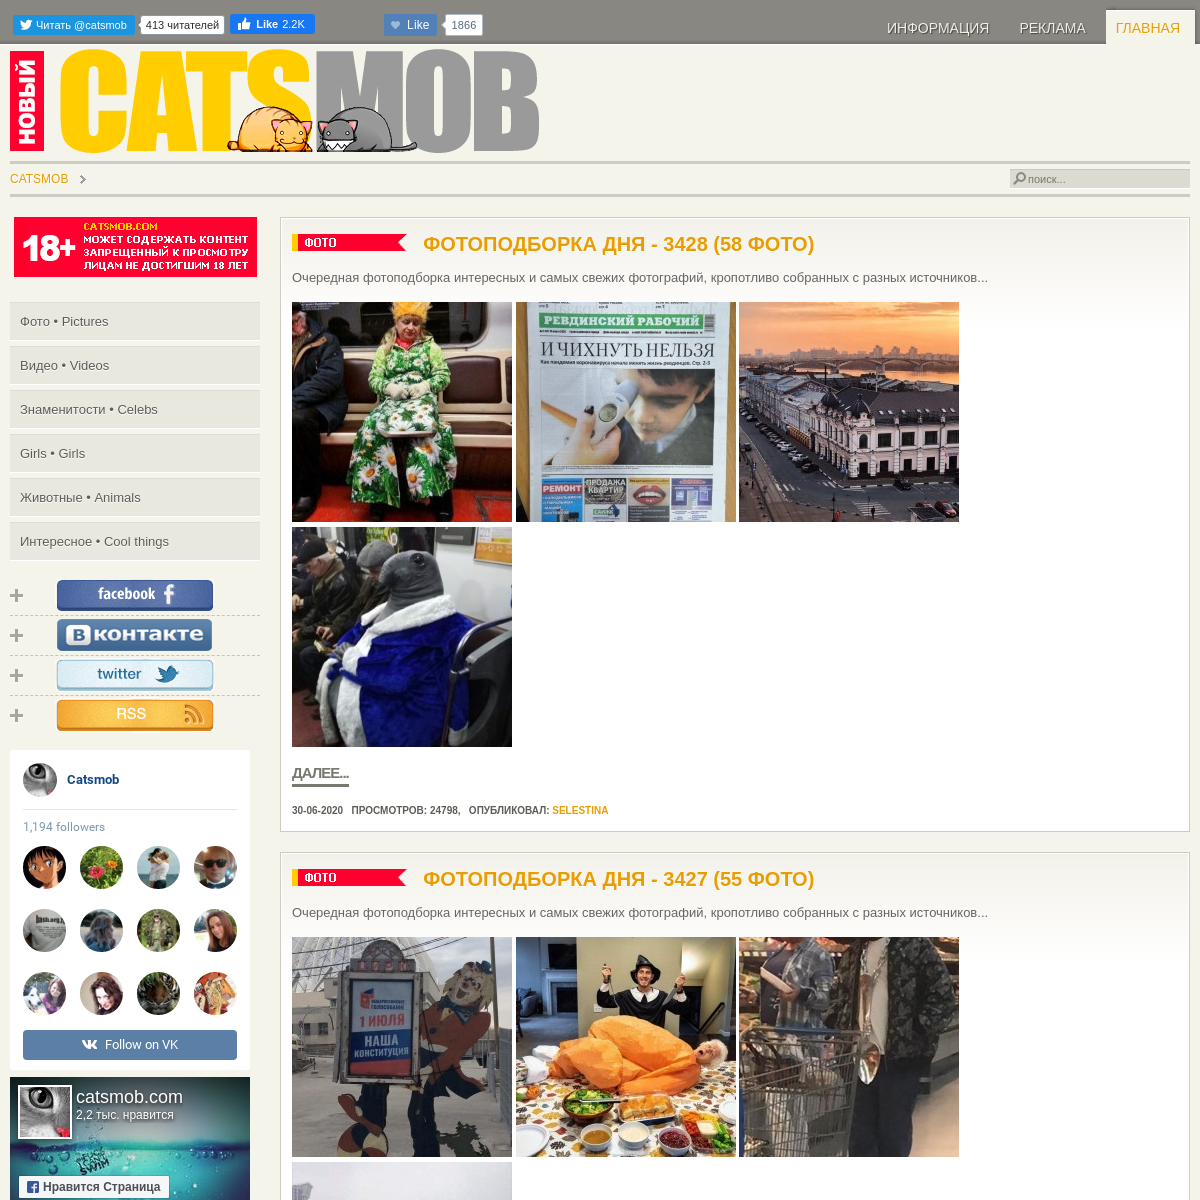 A complete backup of catsmob.com